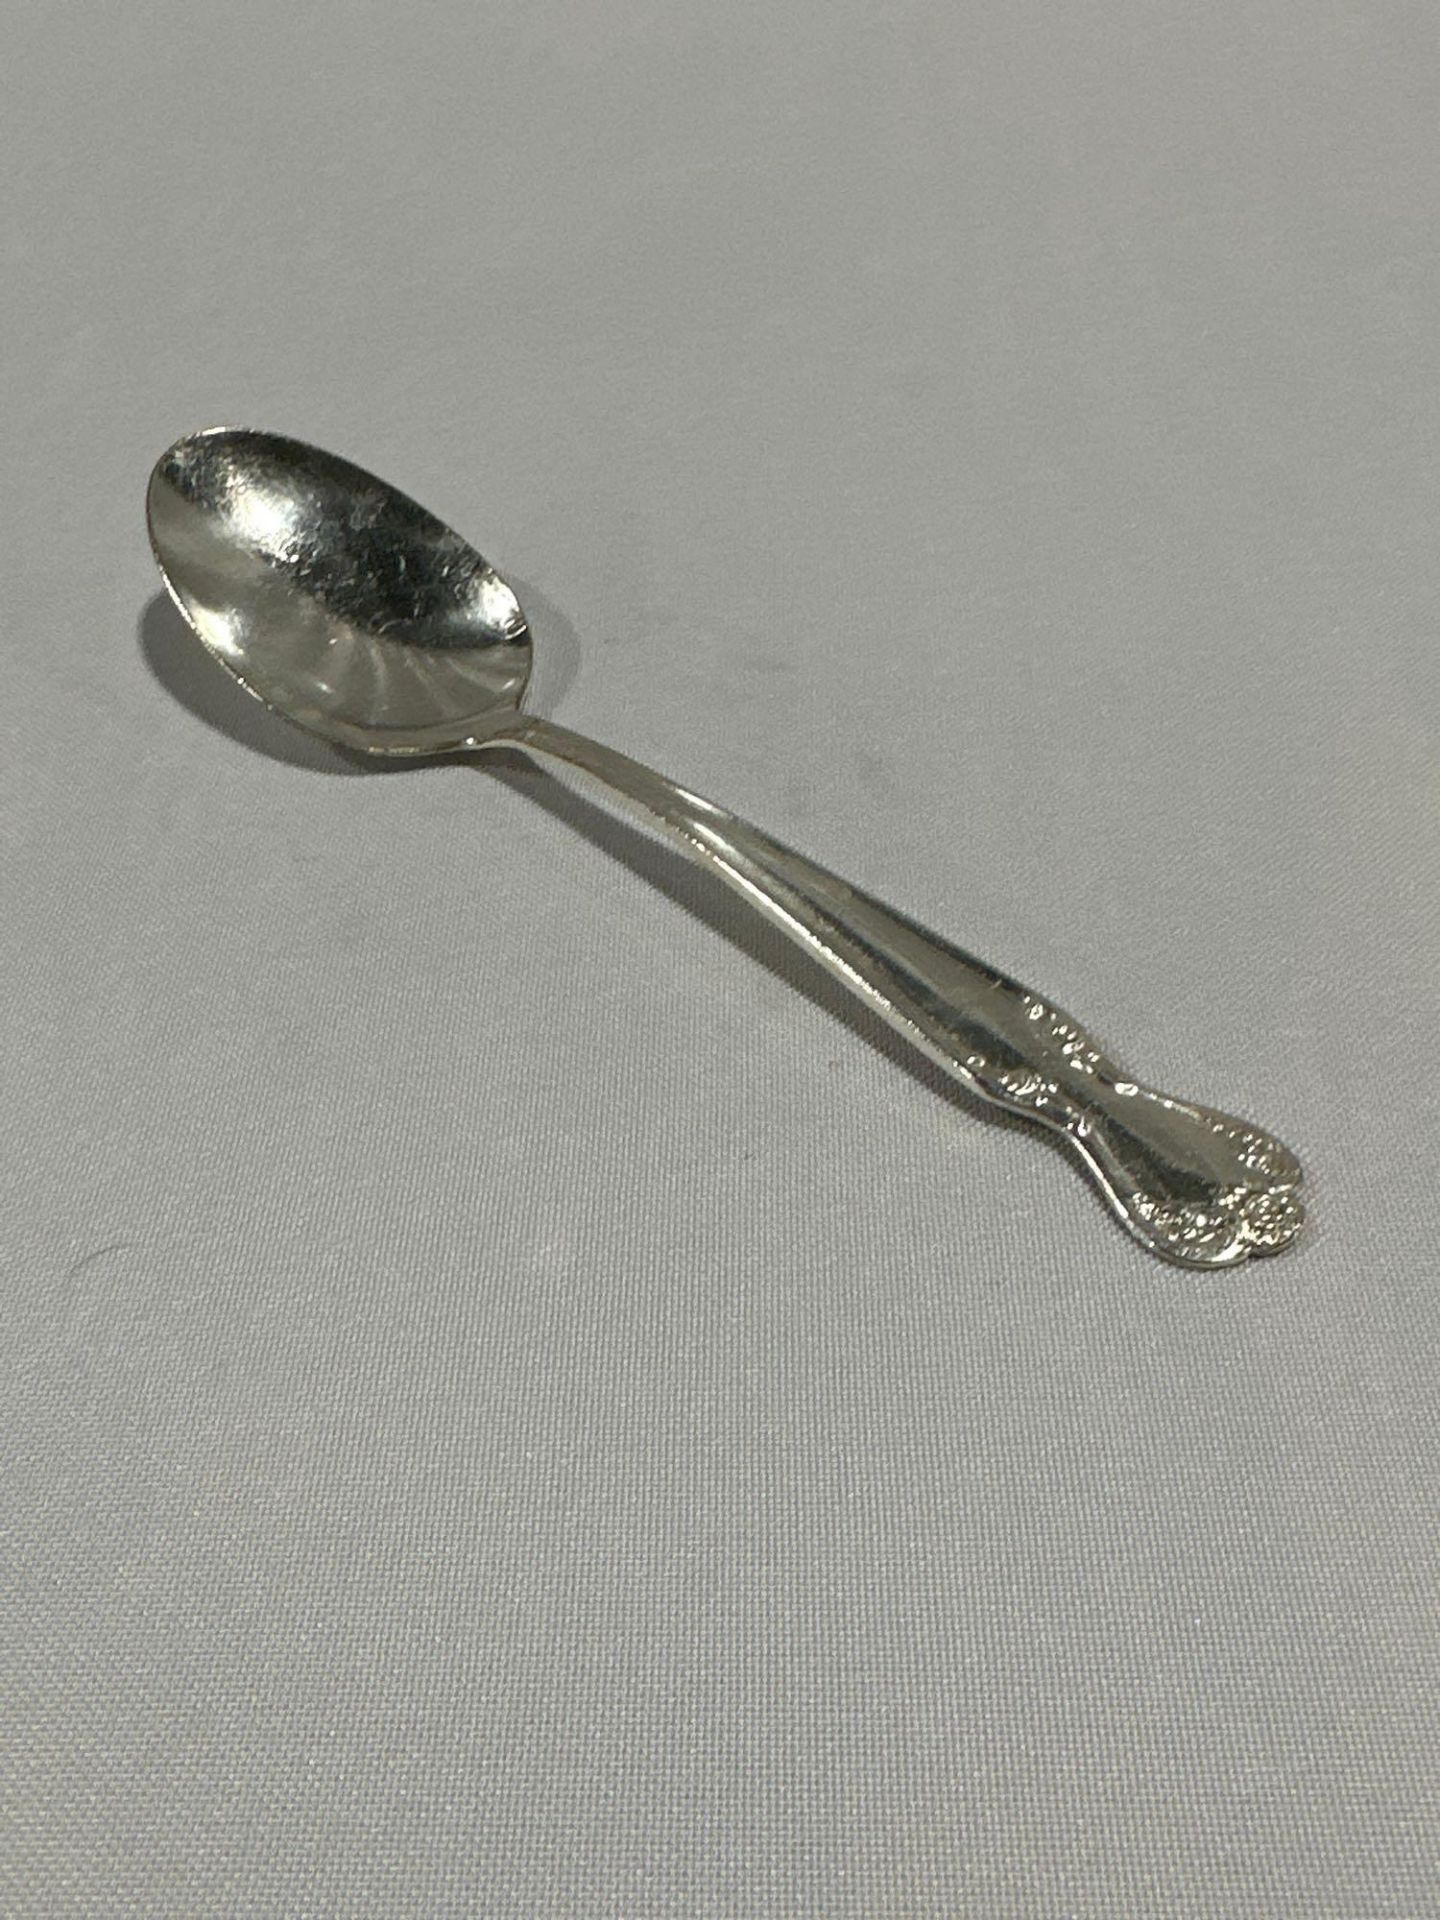 Silver Teaspoon - Image 2 of 2